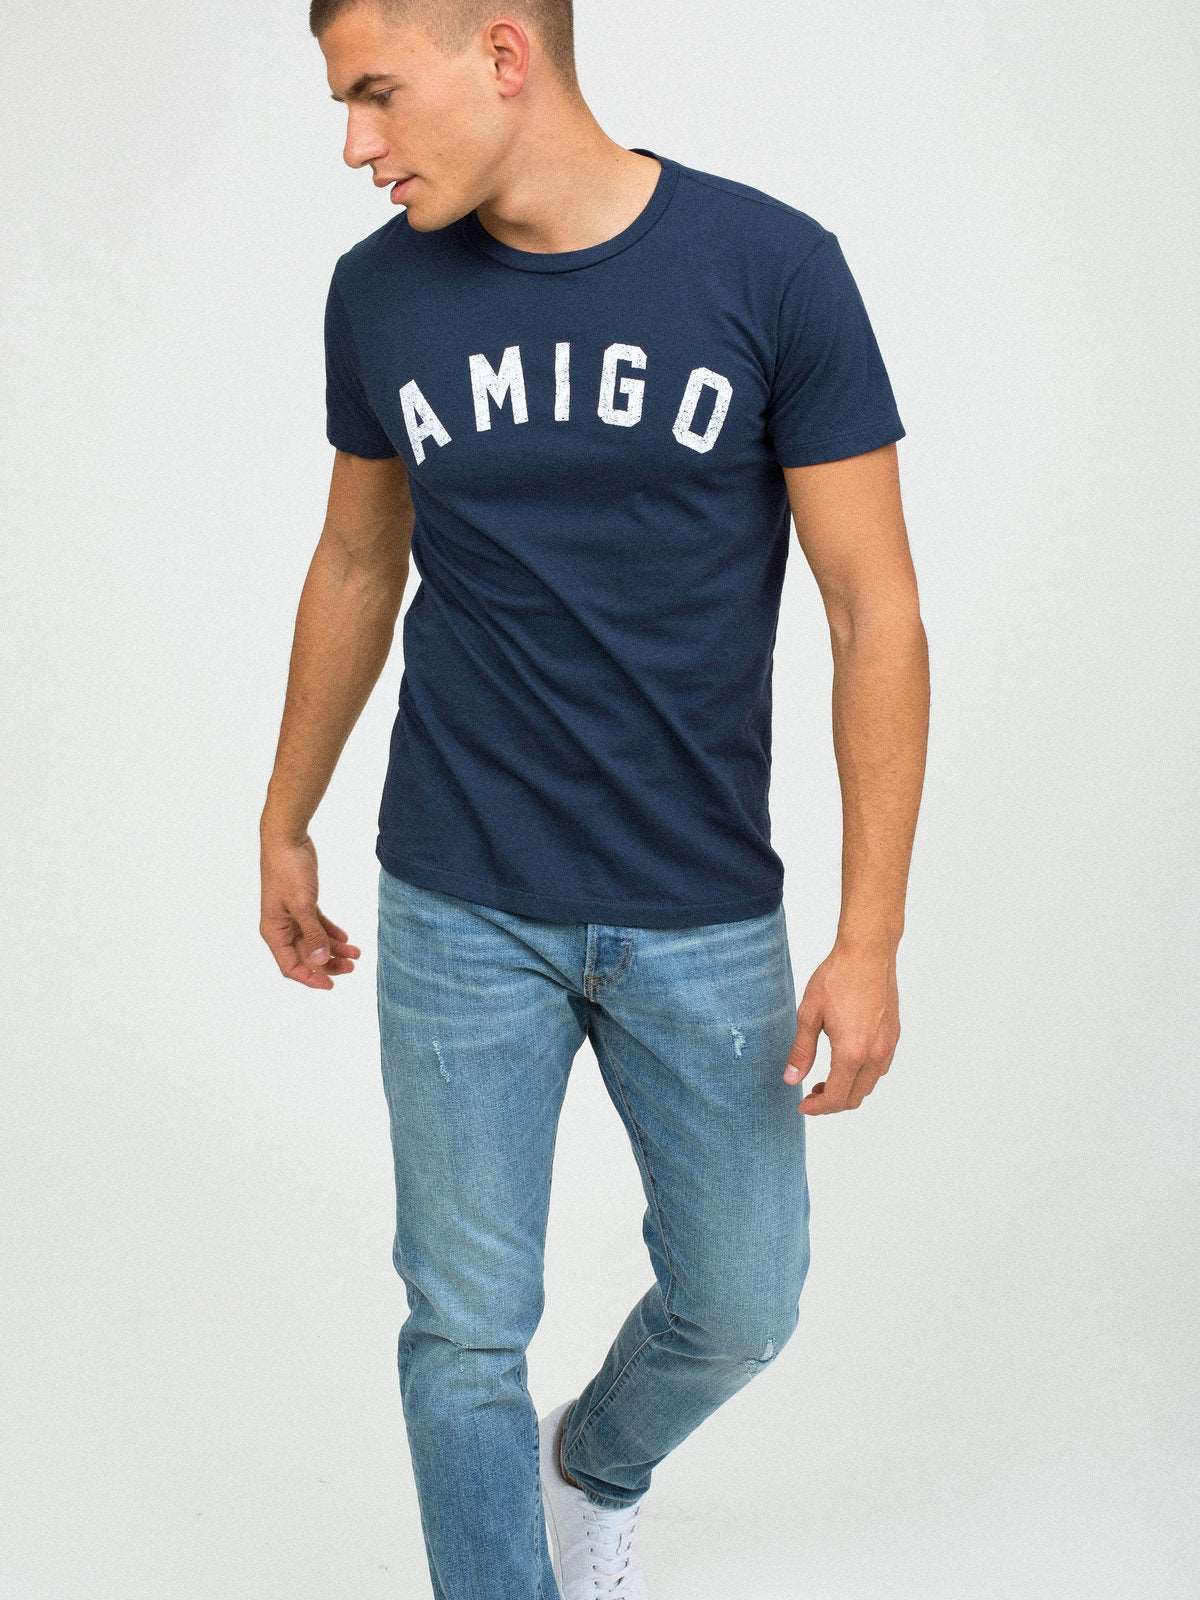 Sol Angeles Amigo Men's Crew Neck T-Shirt - Indigo | CIRCA75.